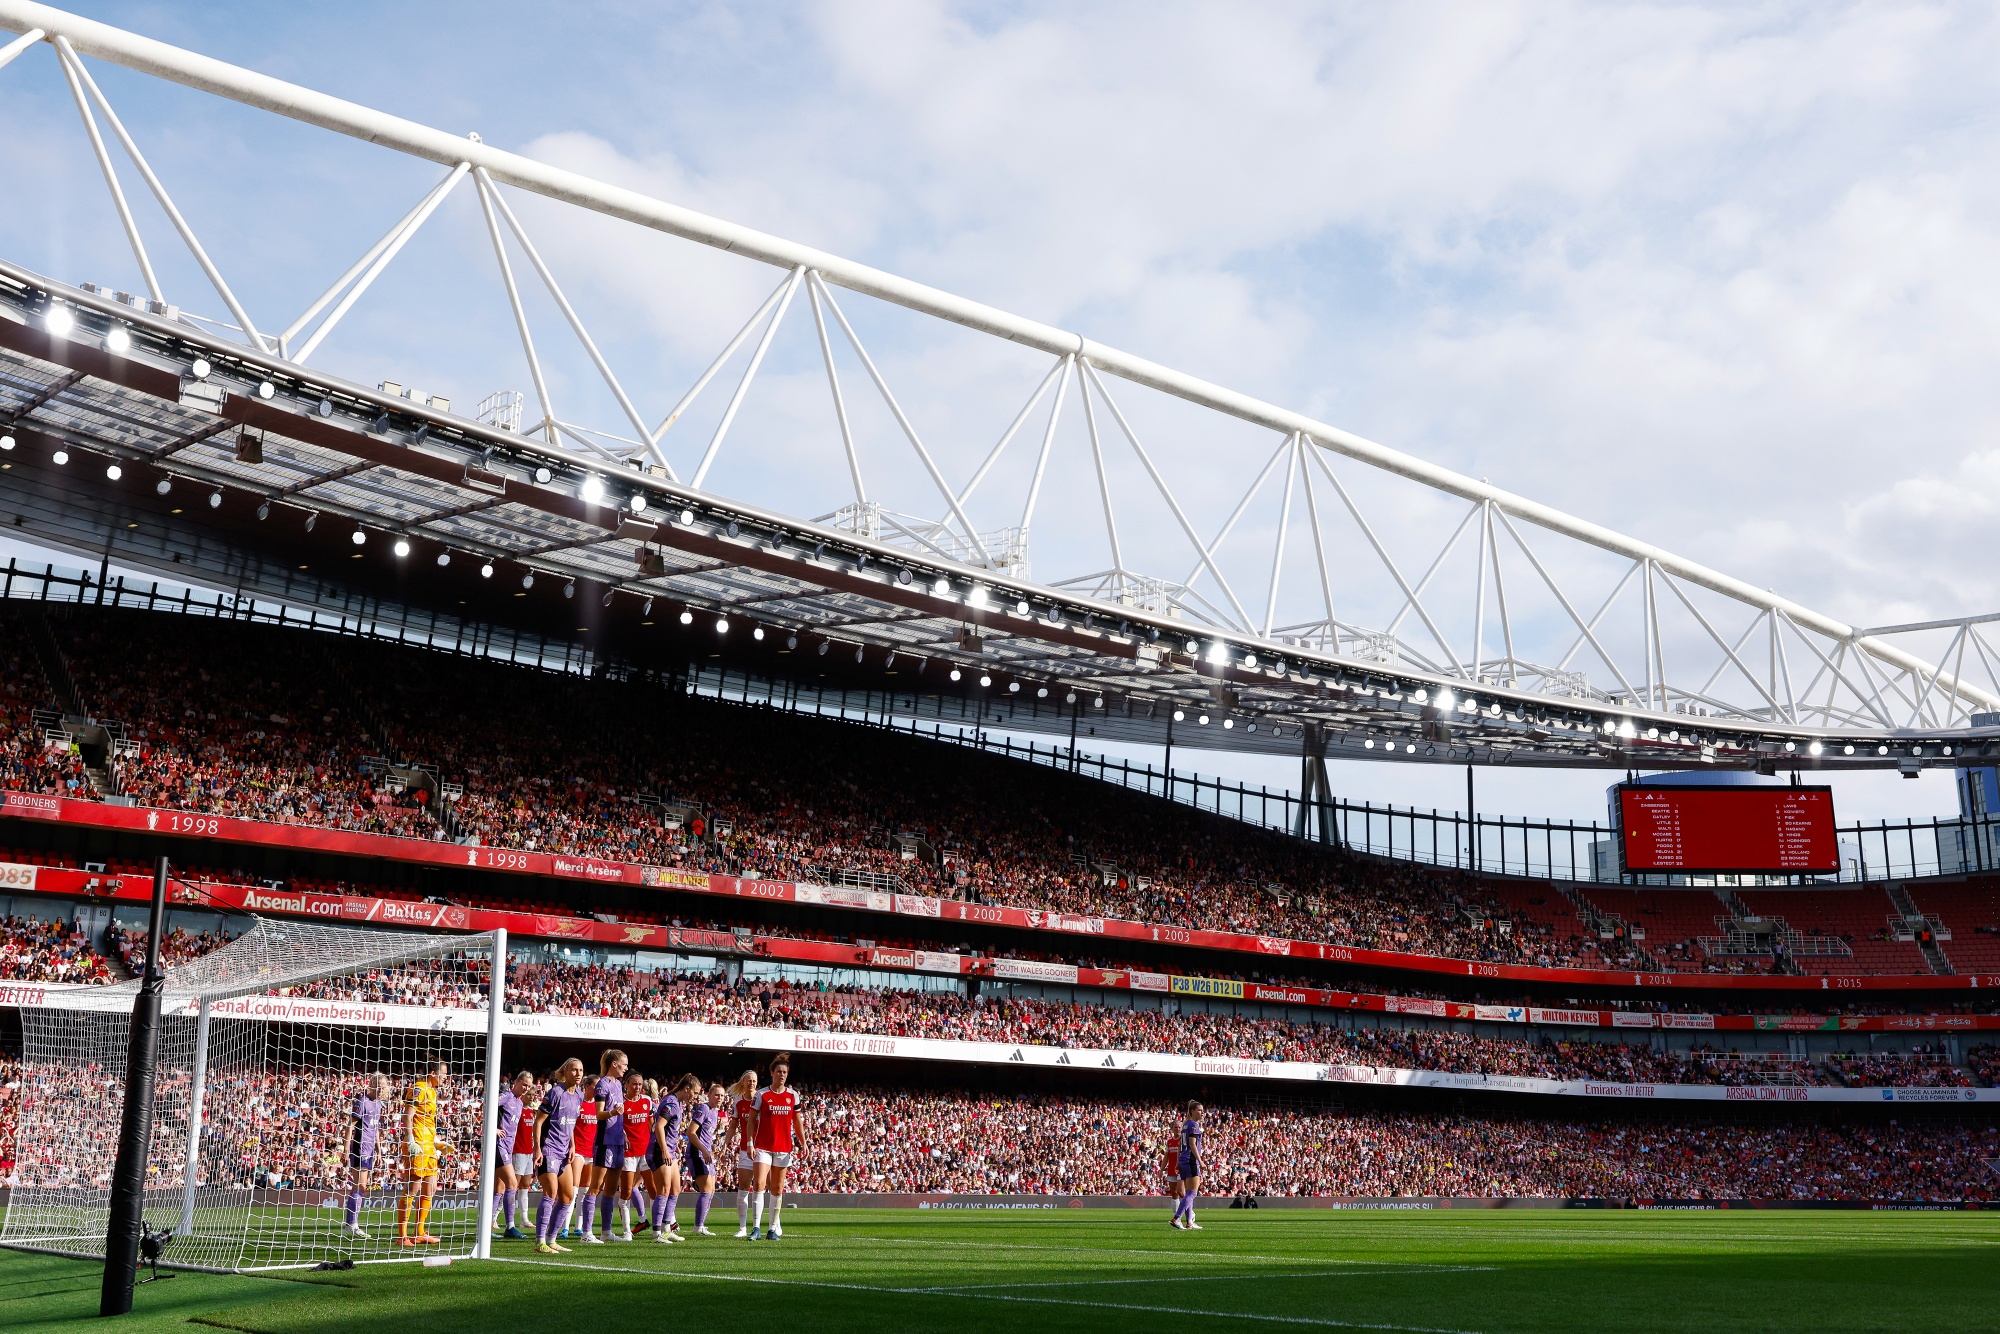 Women's Super League 2023-24 previews No 1: Arsenal